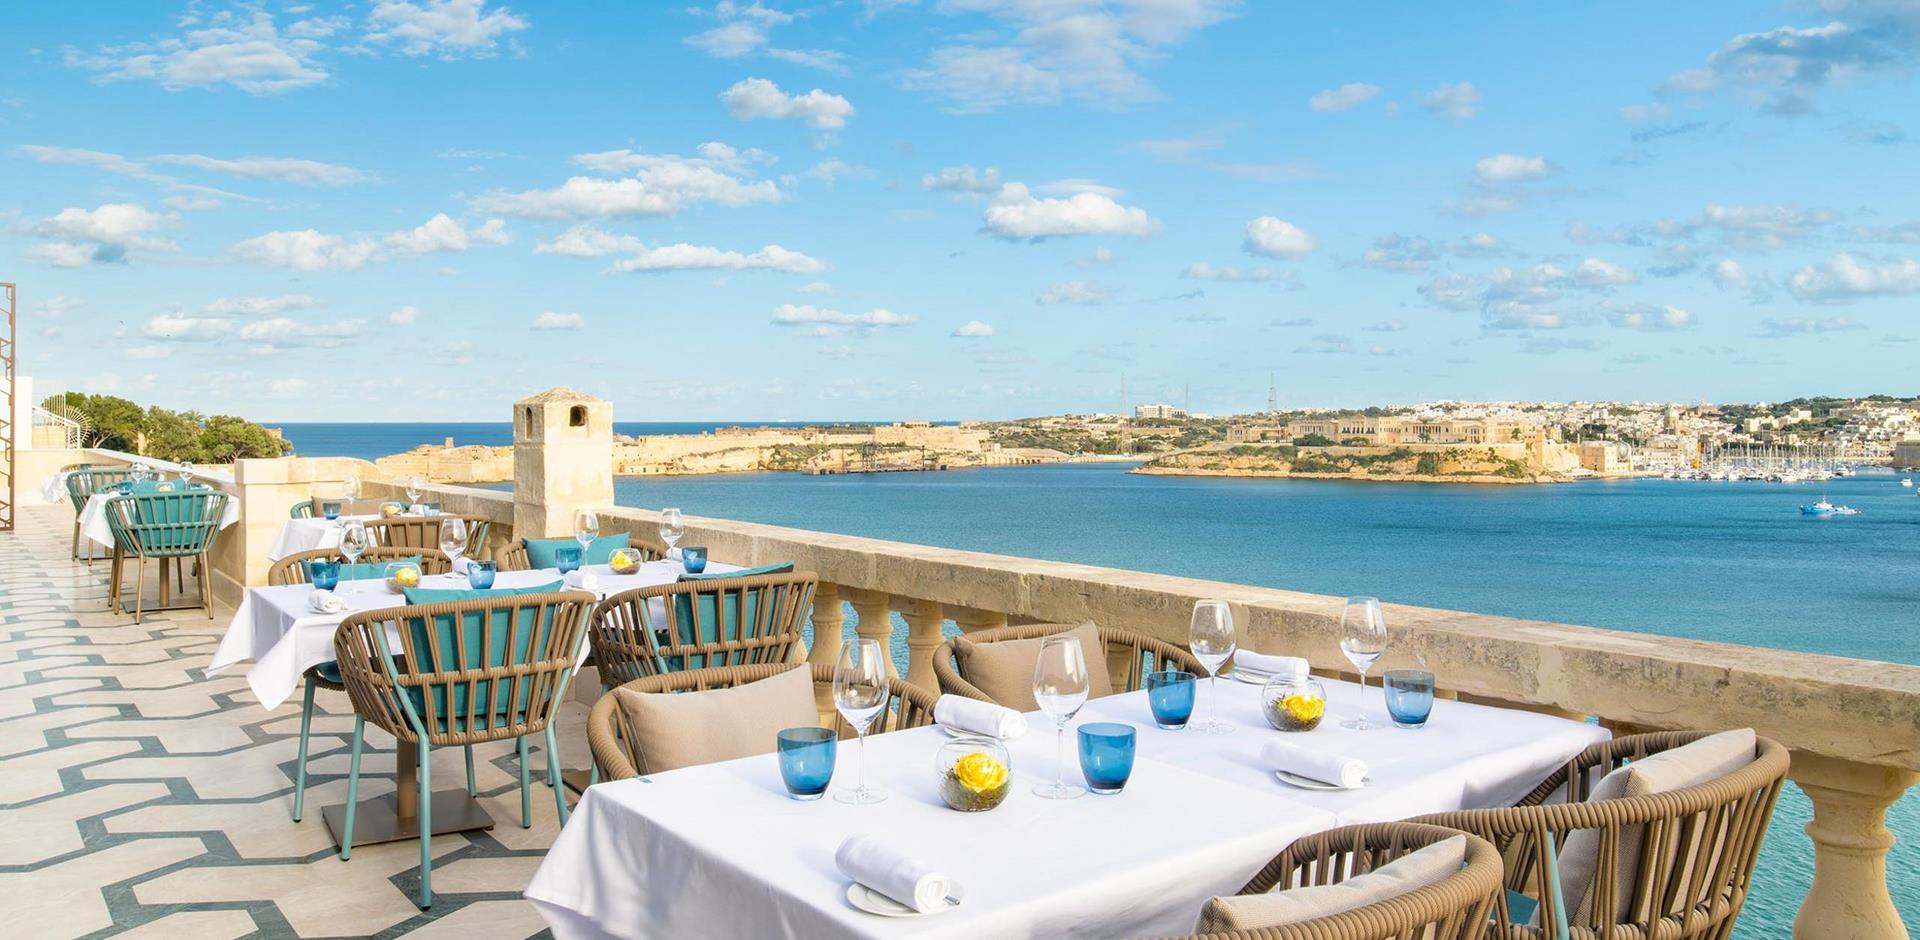 Ion outdoor terrace, Iniala Harbour House, Malta